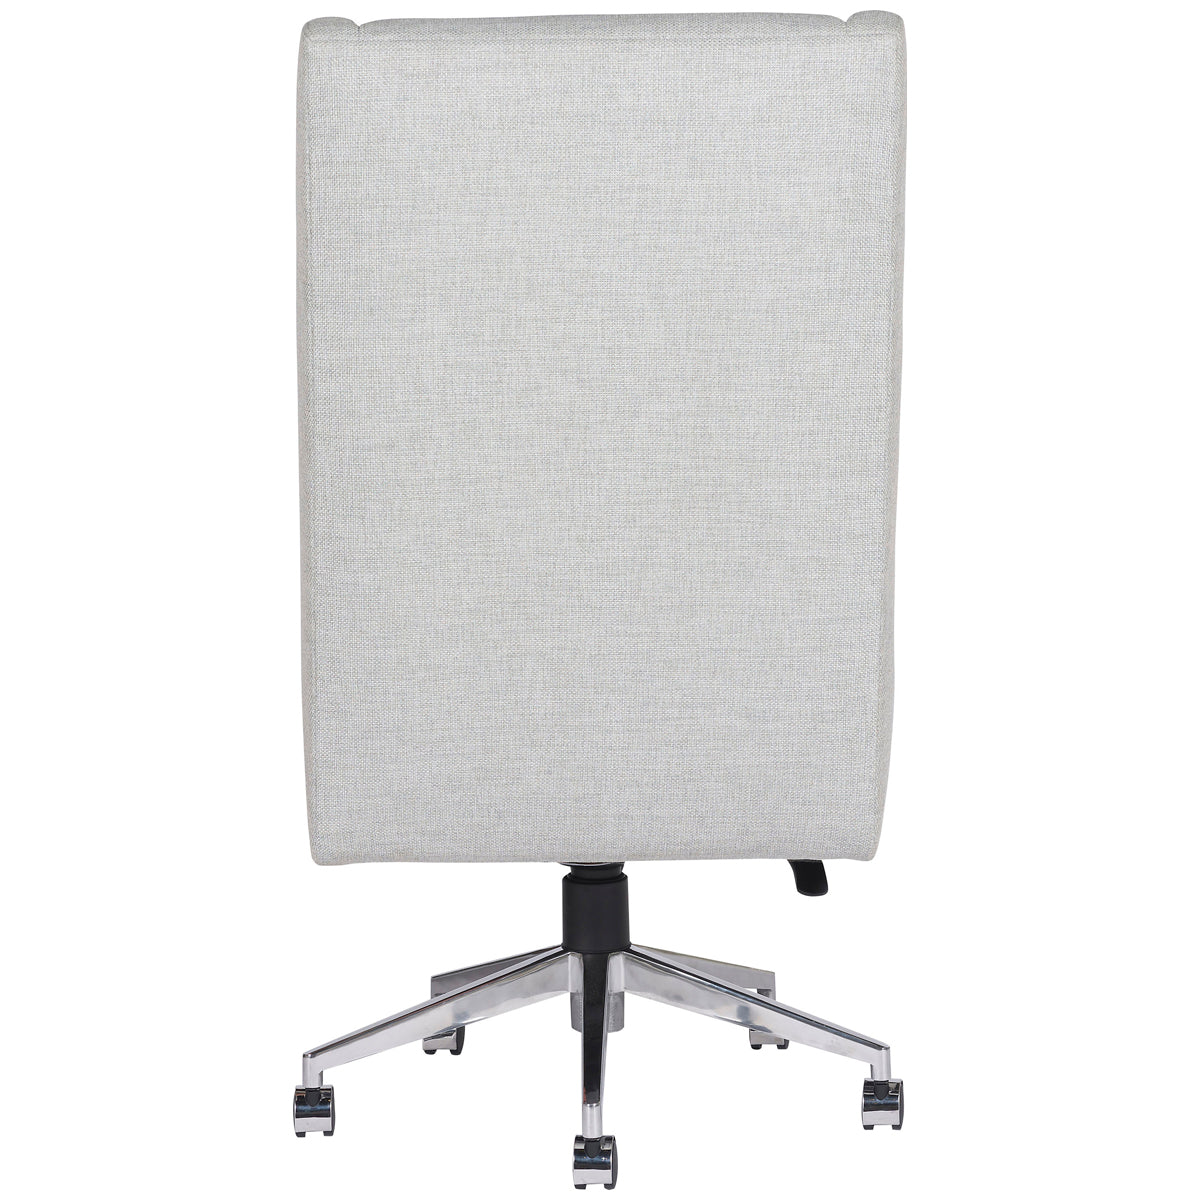 Vanguard Furniture Hartley Desk Chair